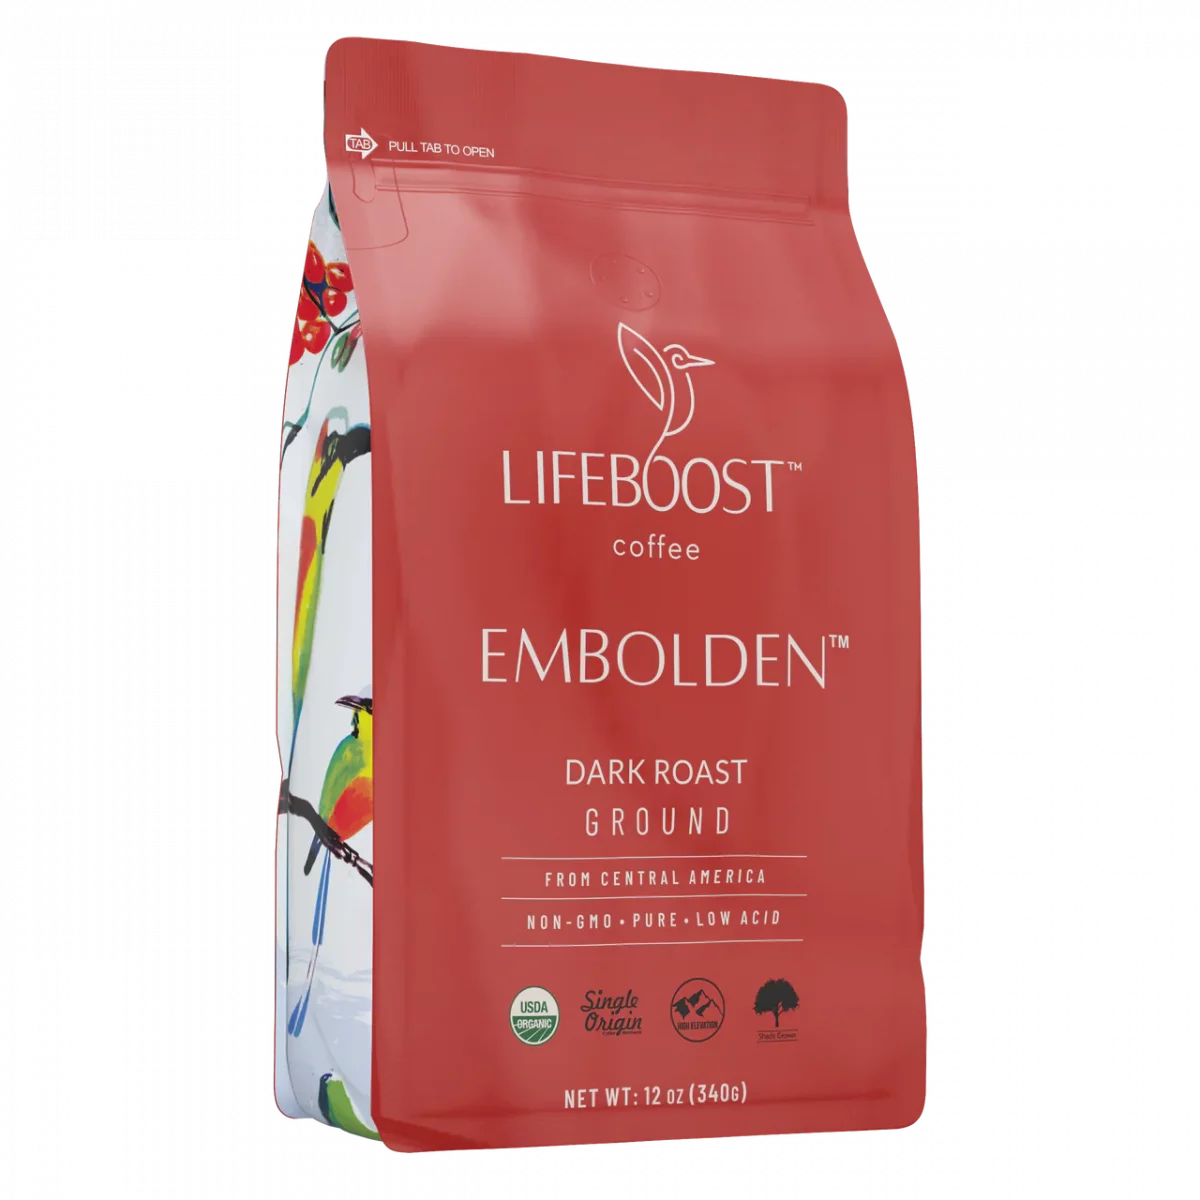 Lifeboost-coffee-embolden-dark-roast-1200x1200